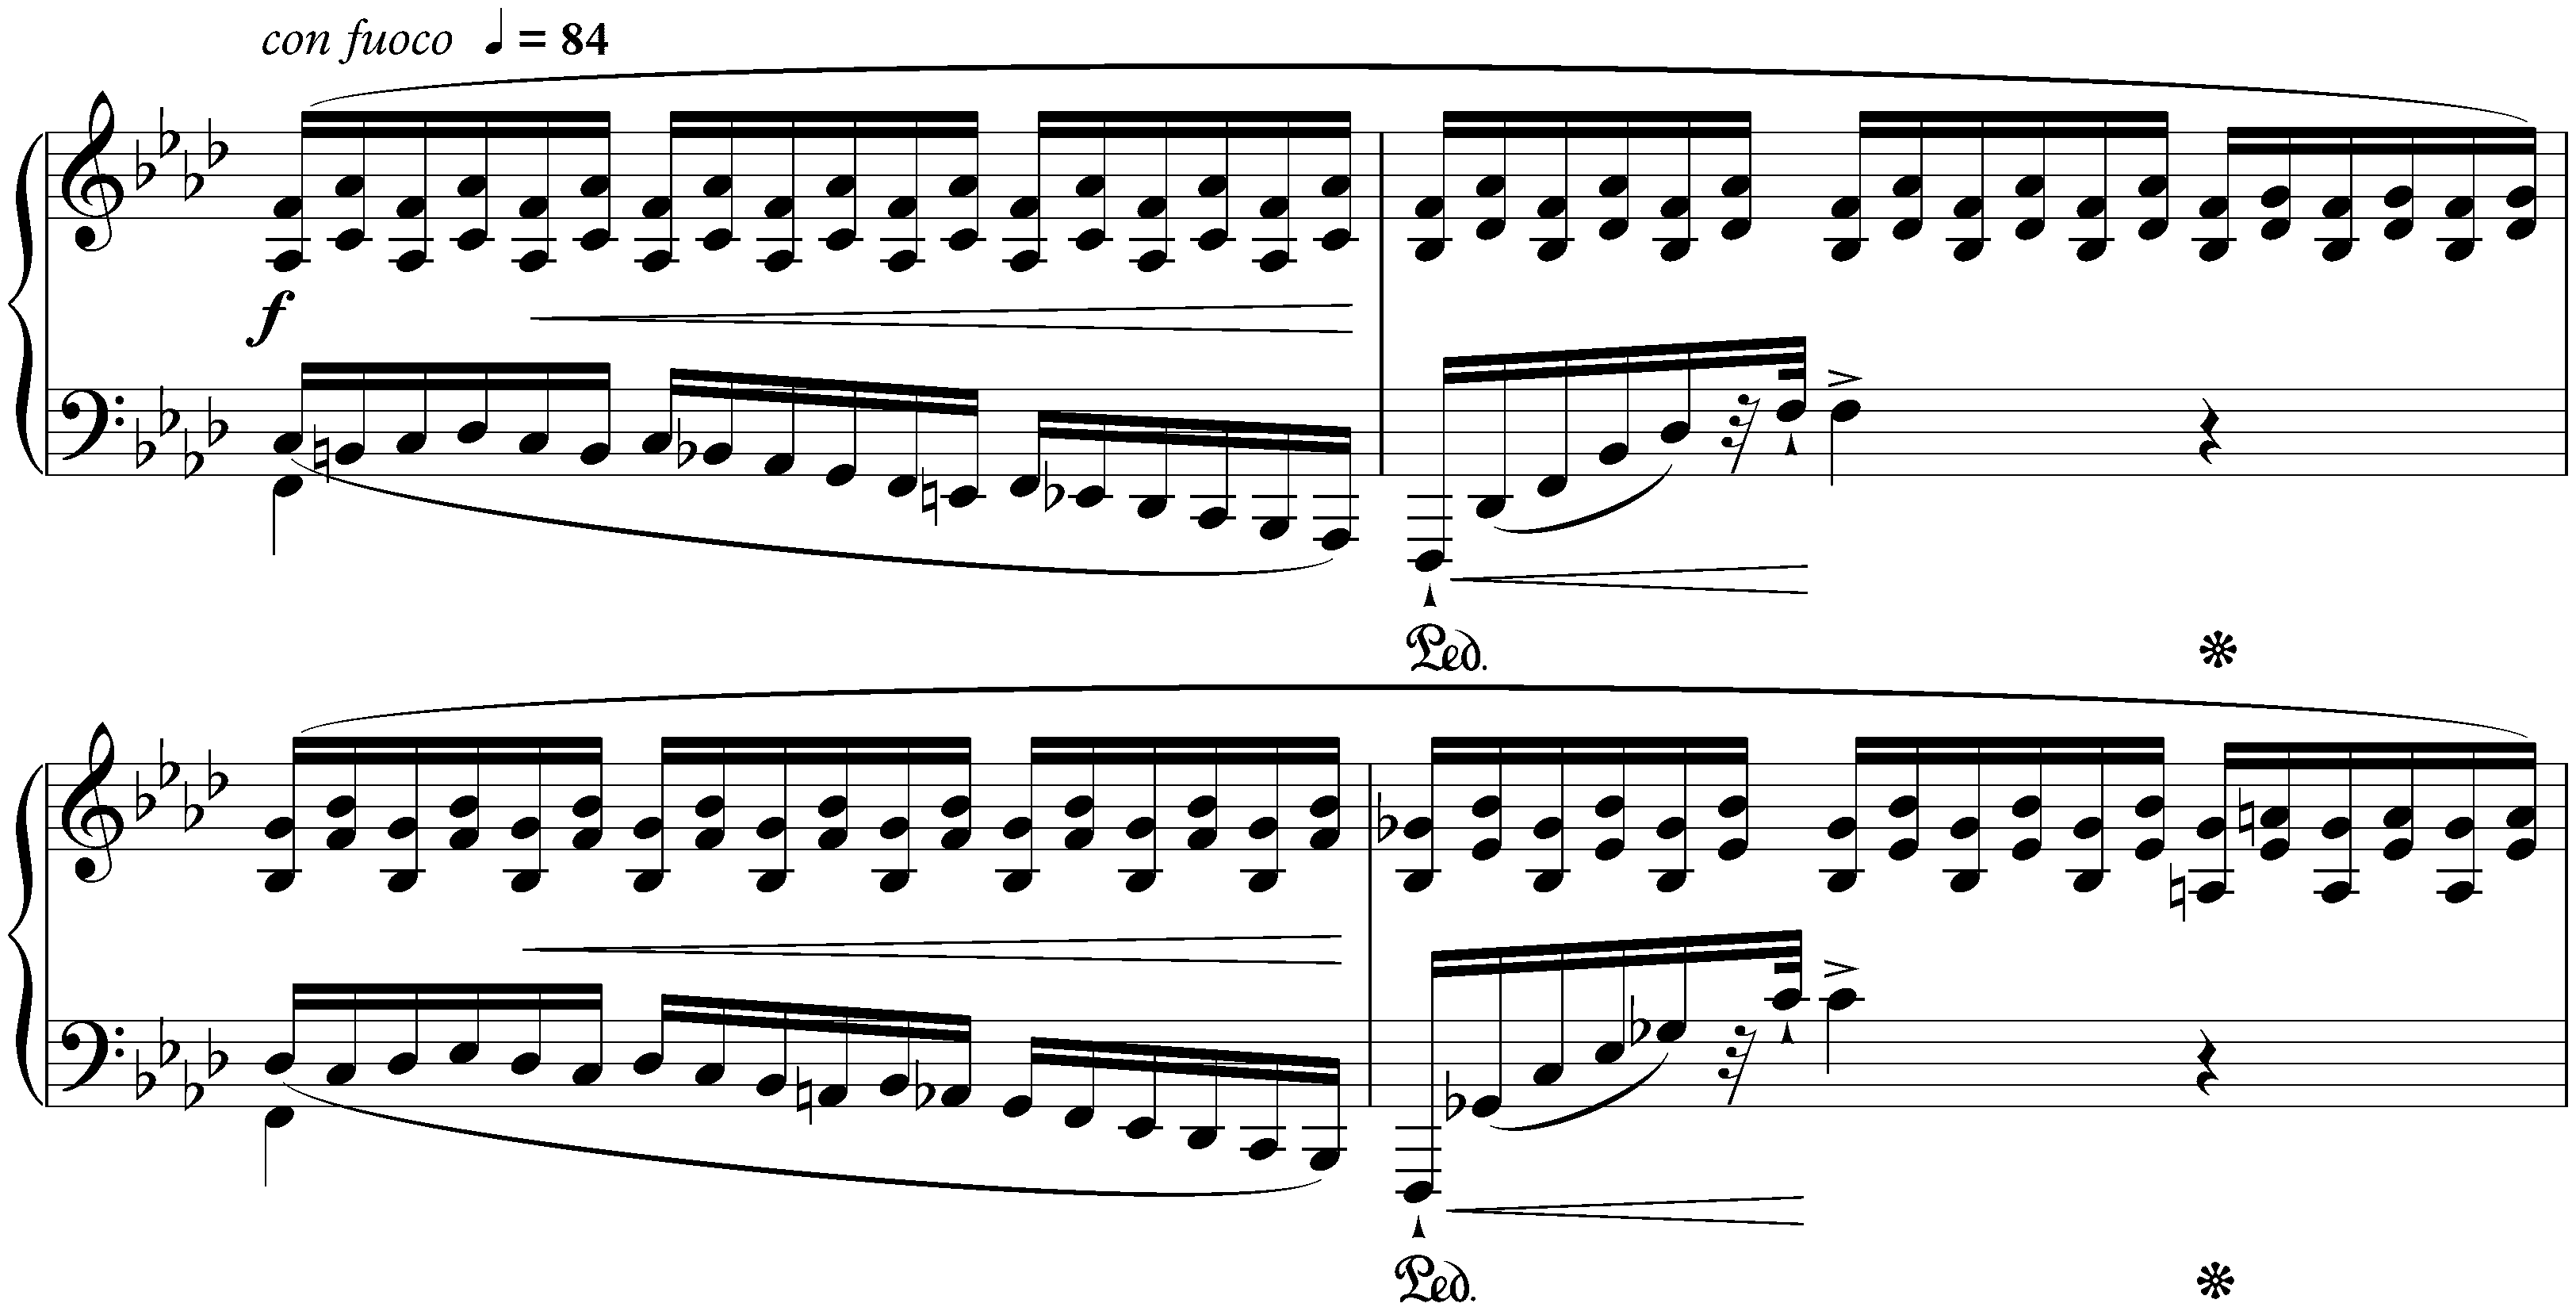 Three Nocturnes, op. 15; 1. F major